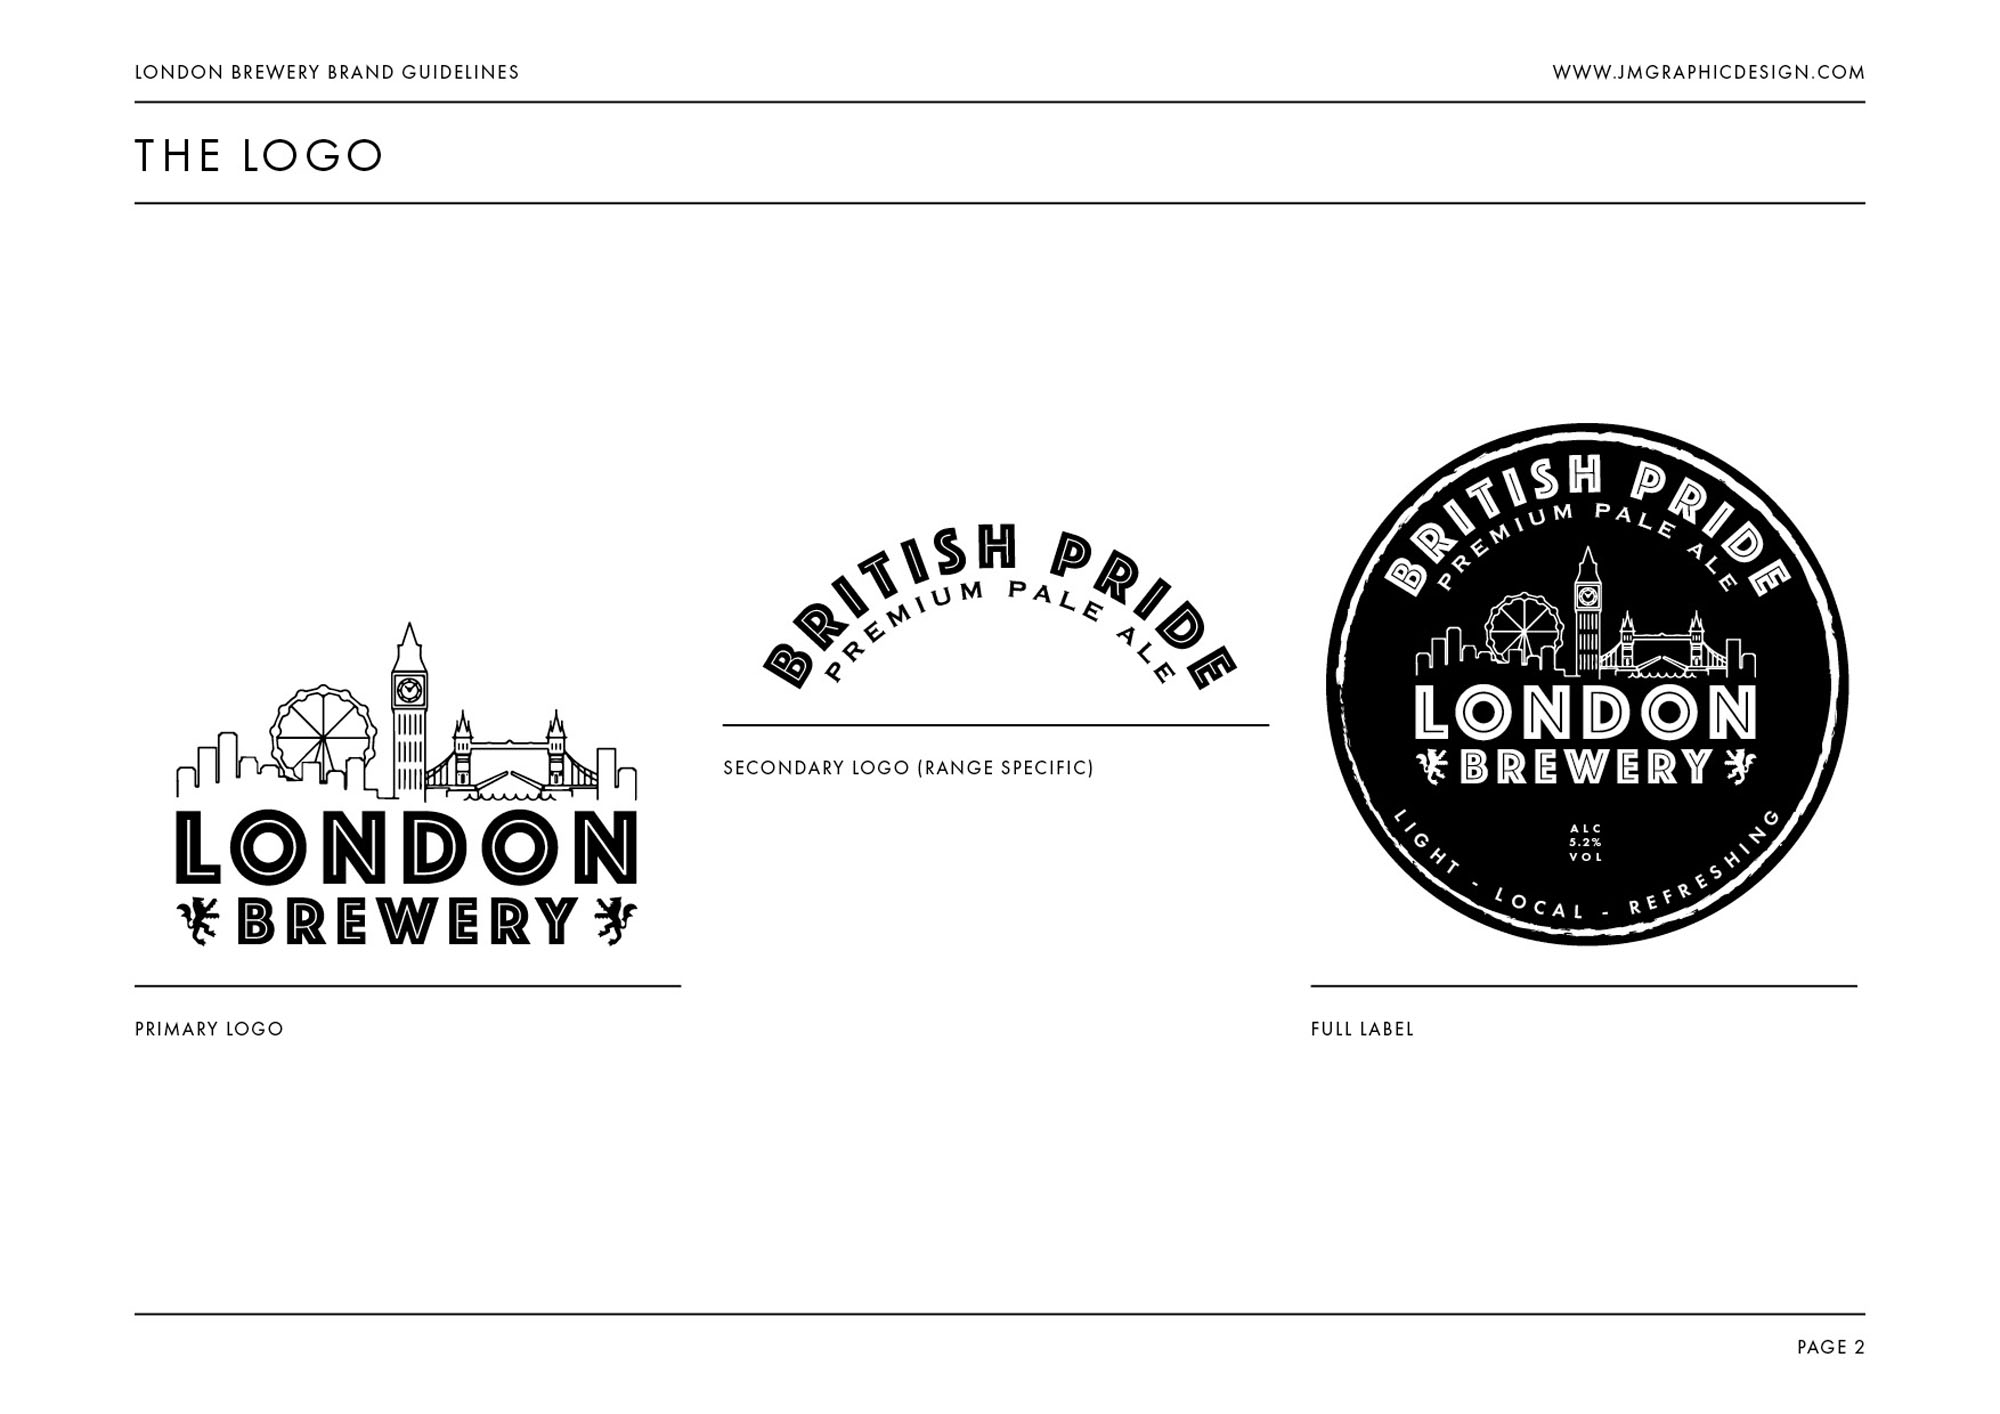 breverage-packaging-design-london